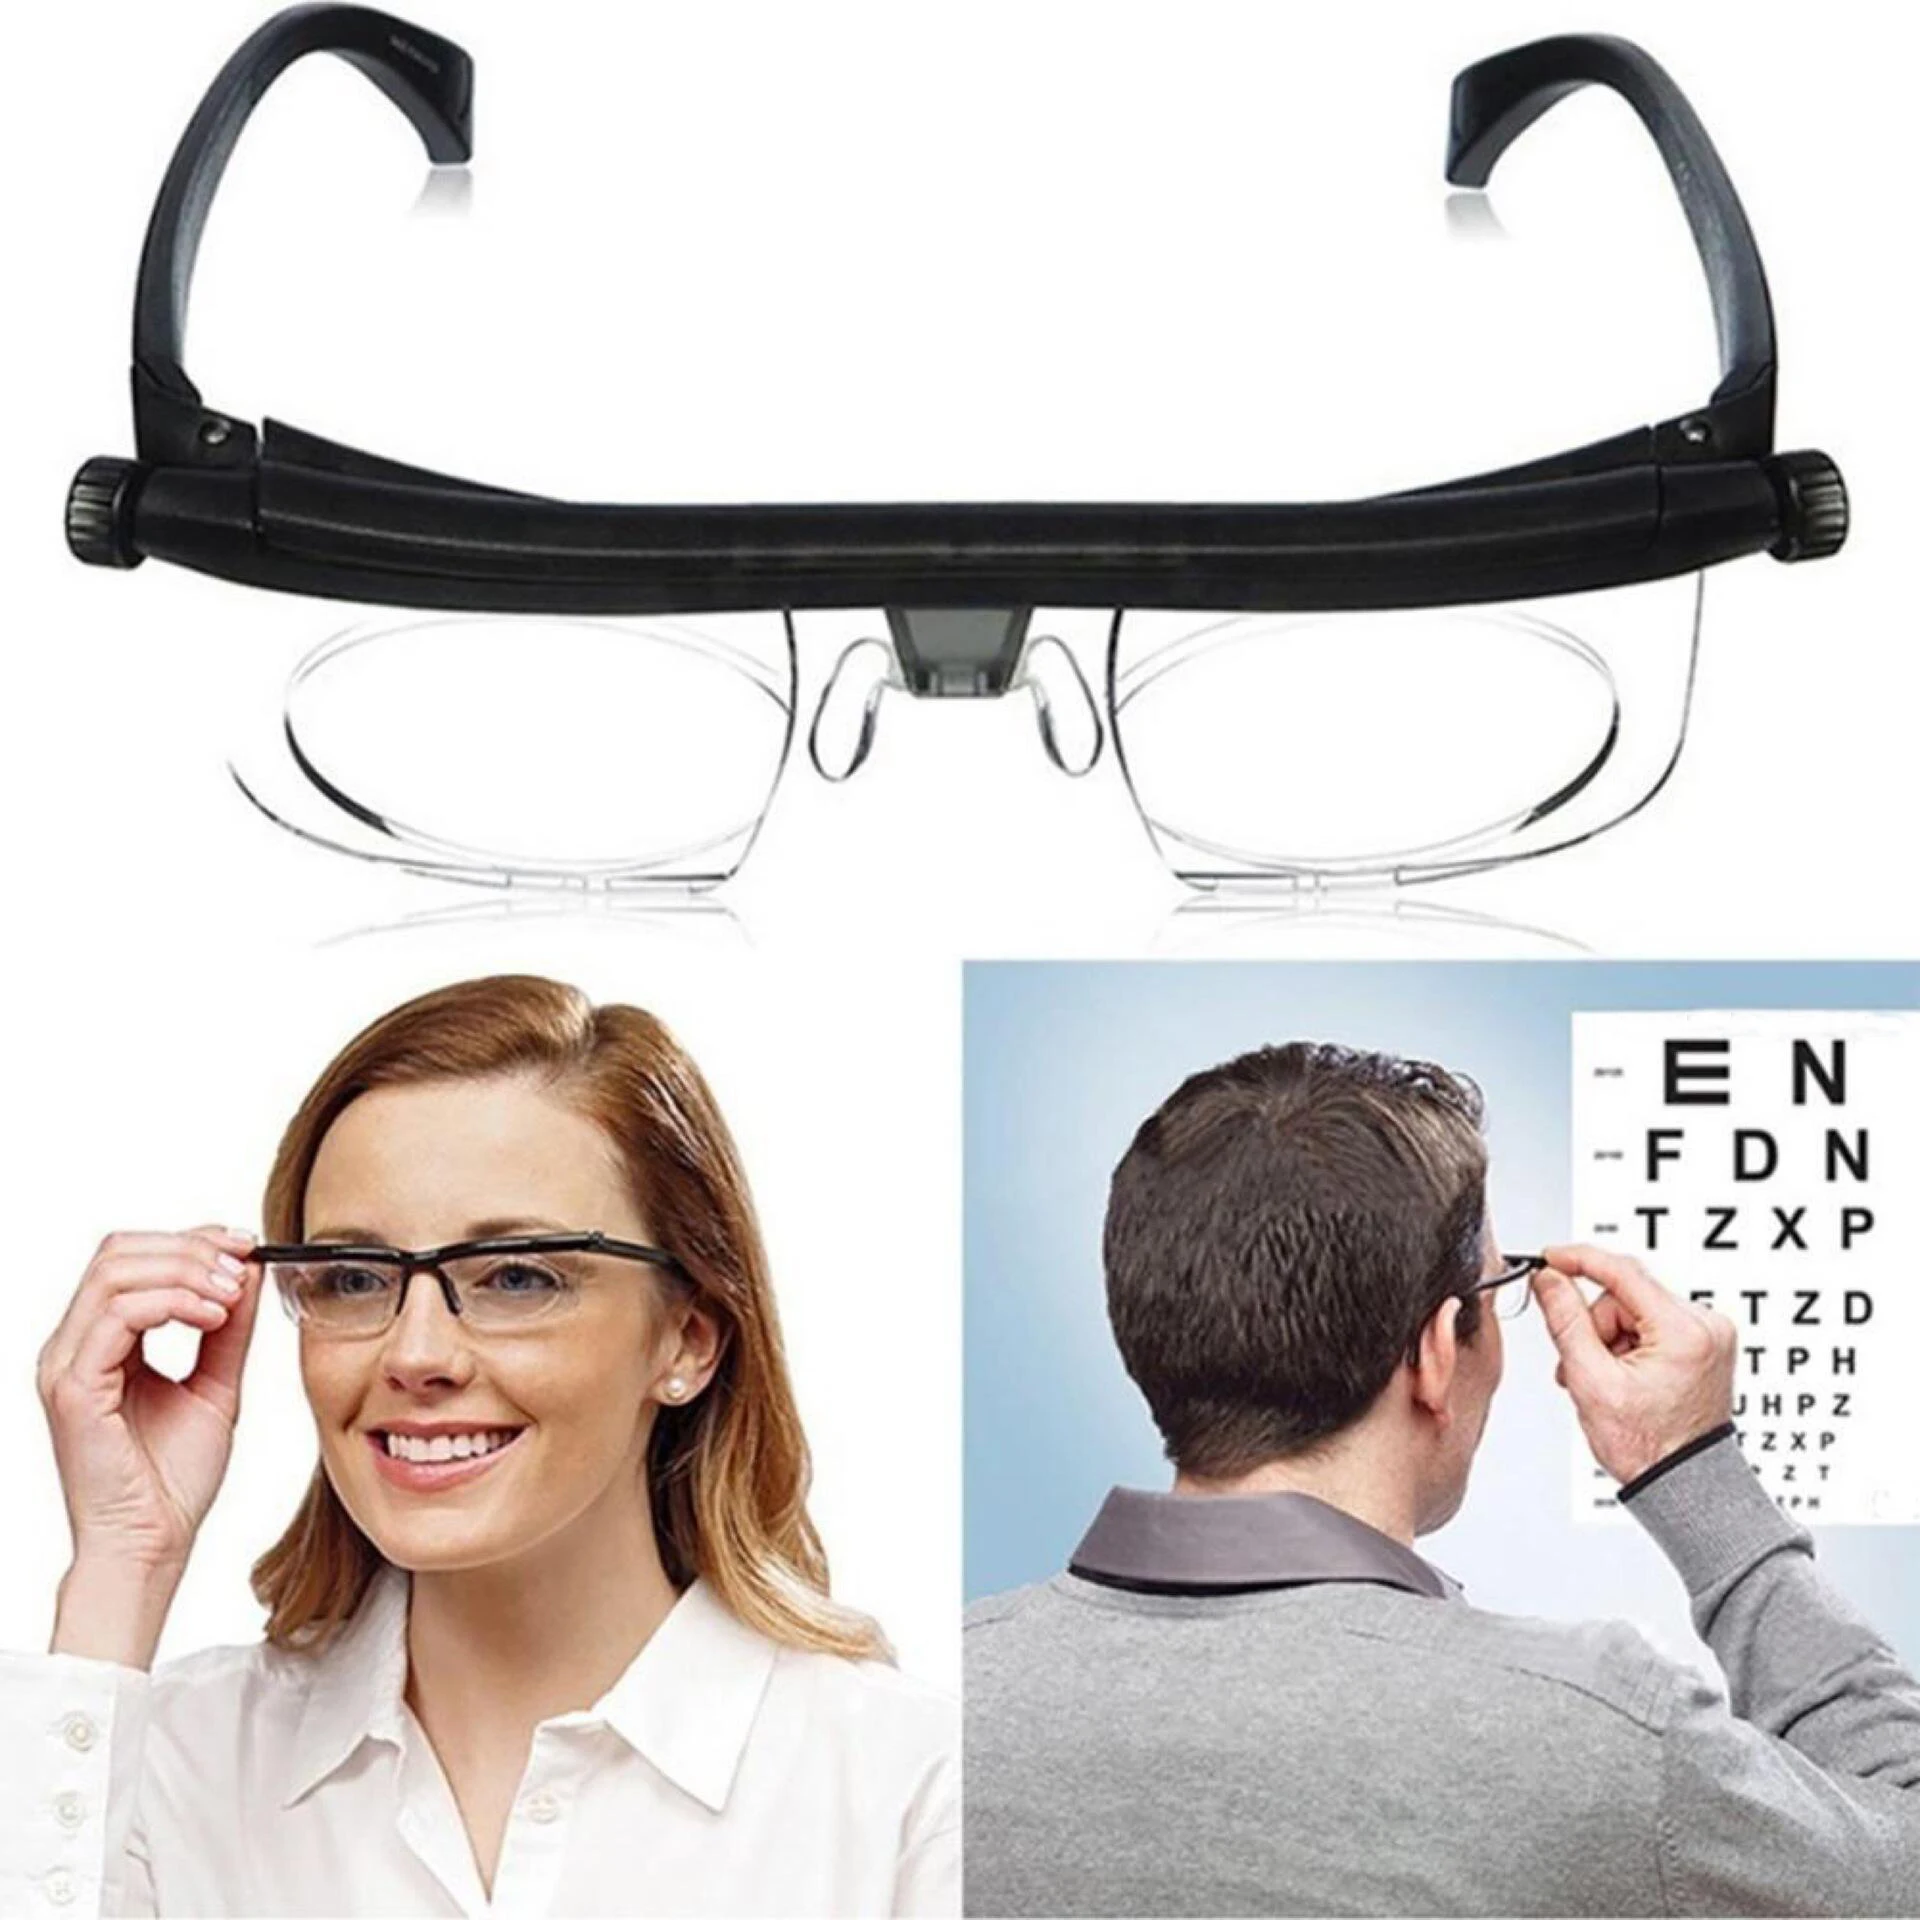 

Hot Sale Popular Adjustable Vision Focus TR90 Myopia Eye Glasses -4D to +6D Eyeglasses Reading Eye Glasses